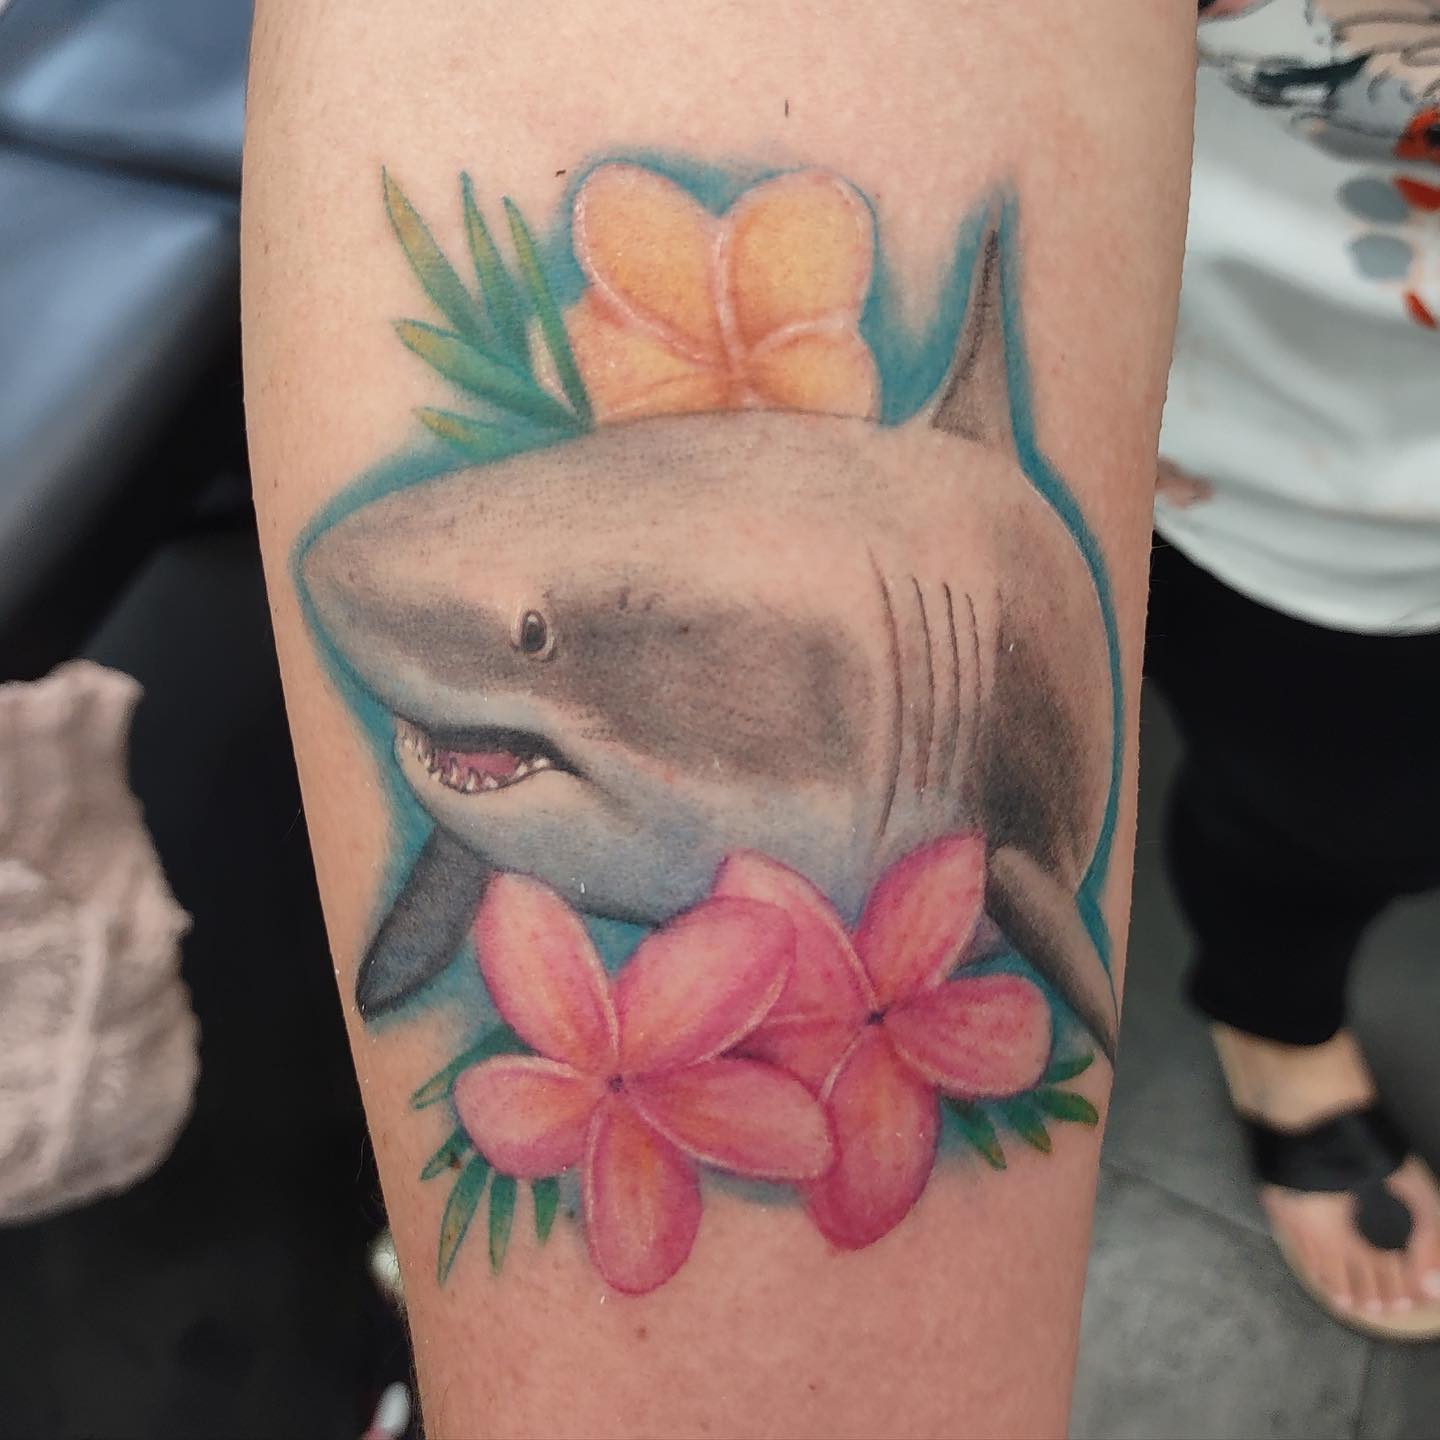 Tatuaje de tiburón colorido.